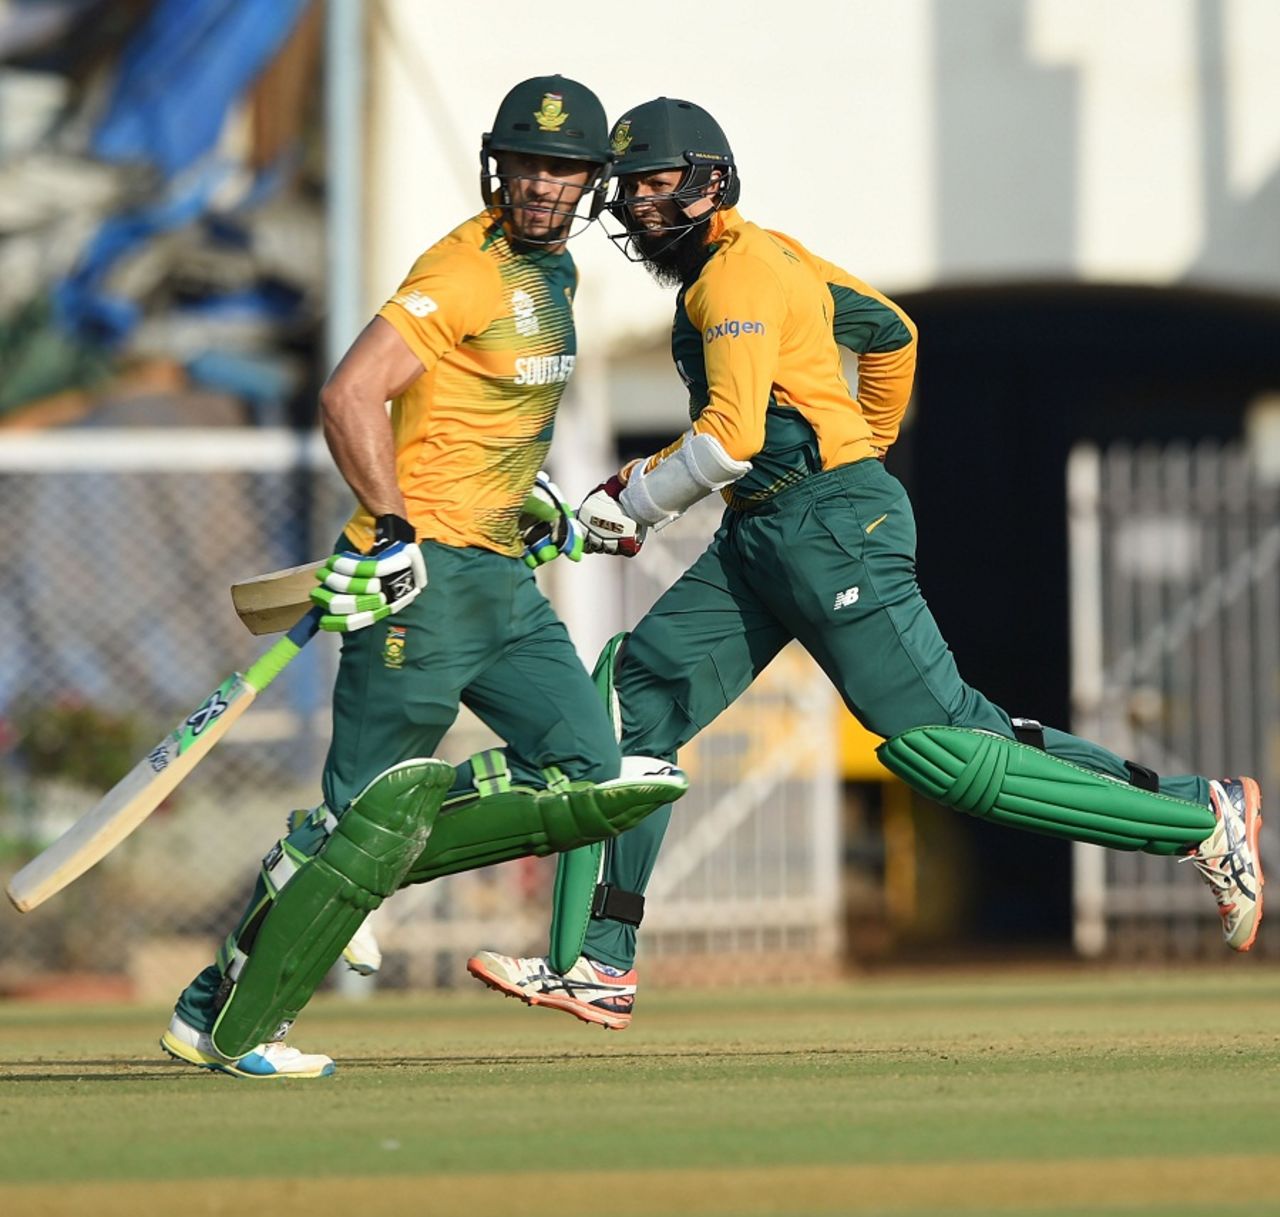 Faf du Plessis and Hashim Amla complete a run, Mumbai Cricket Association XI v South Africa, World T20 warm-ups, Mumbai, March 15, 2016